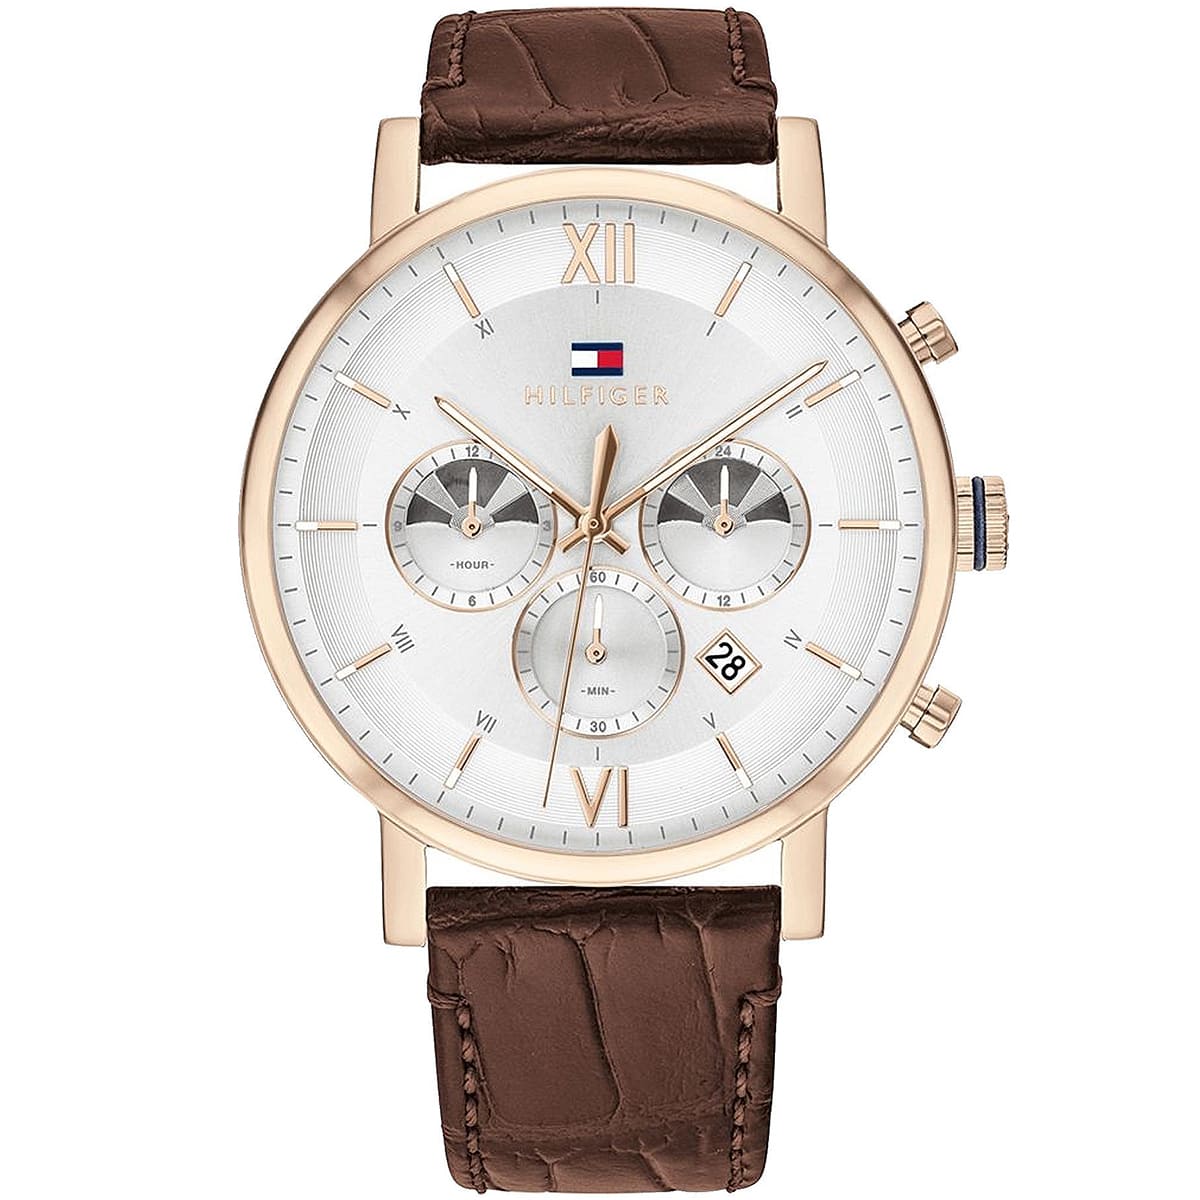 1710394-tommy-hilfiger-watch-men-cream-dial-leather-brown-strap-quartz-battery-analog-chronograph-evan